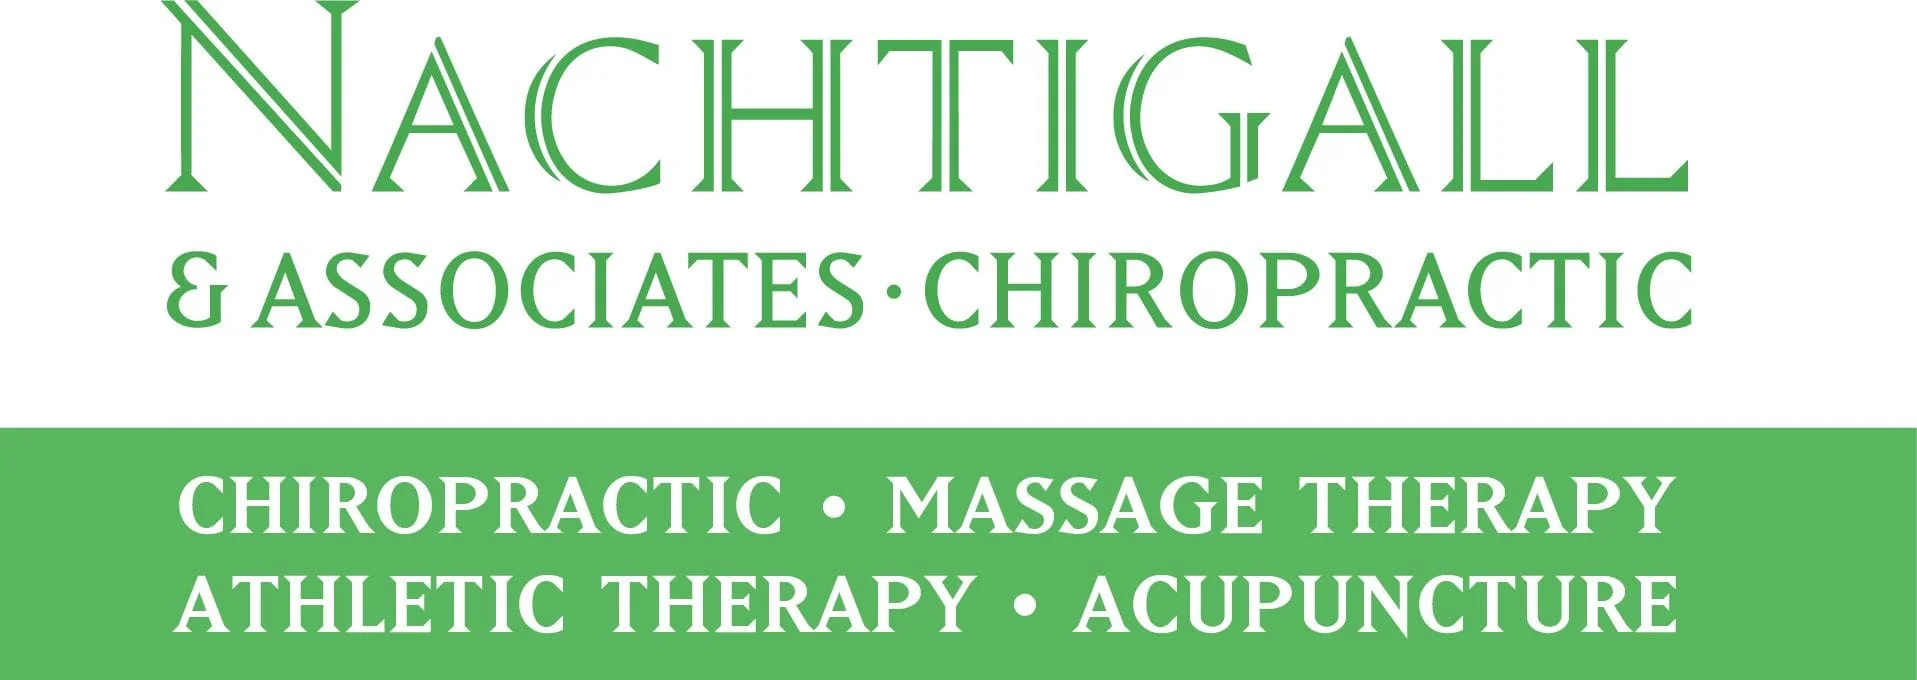 Nachtigall & Associates Chiropractic